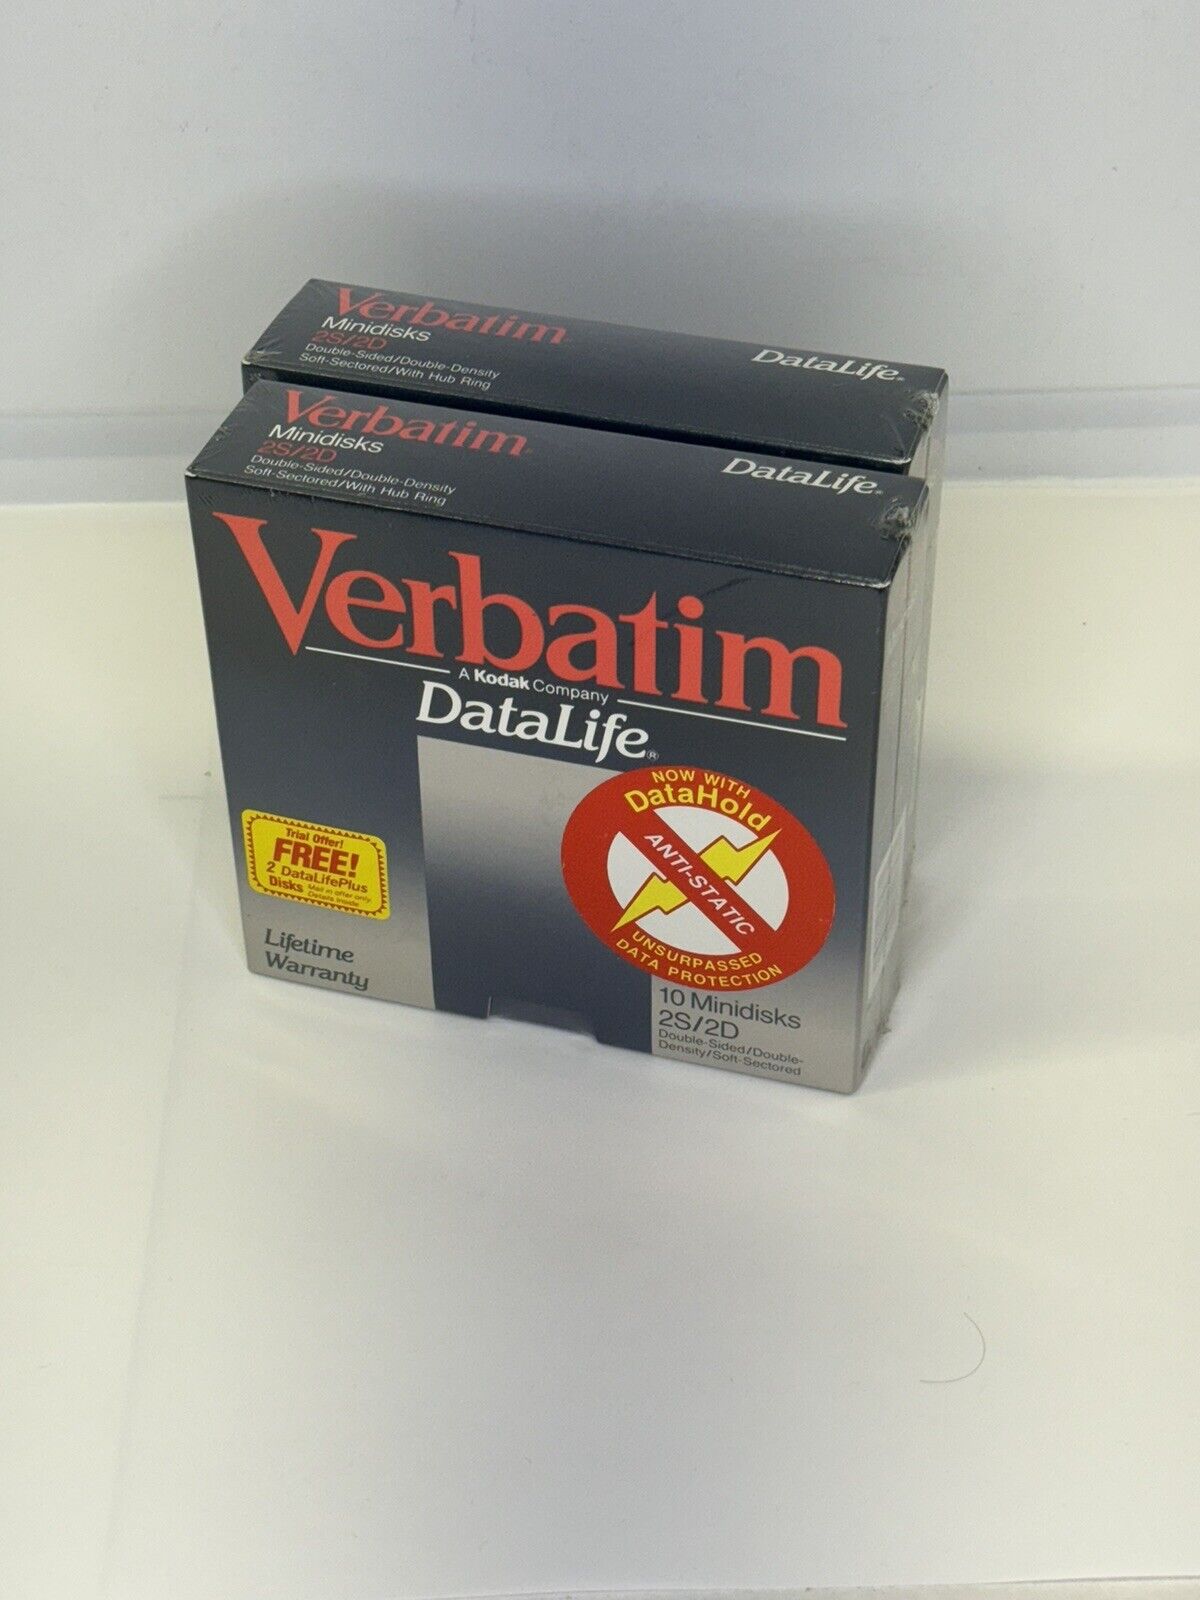 Lot of 2 Boxes - Verbatim Data Life 2S/2D Teflon 10 Minidiscs